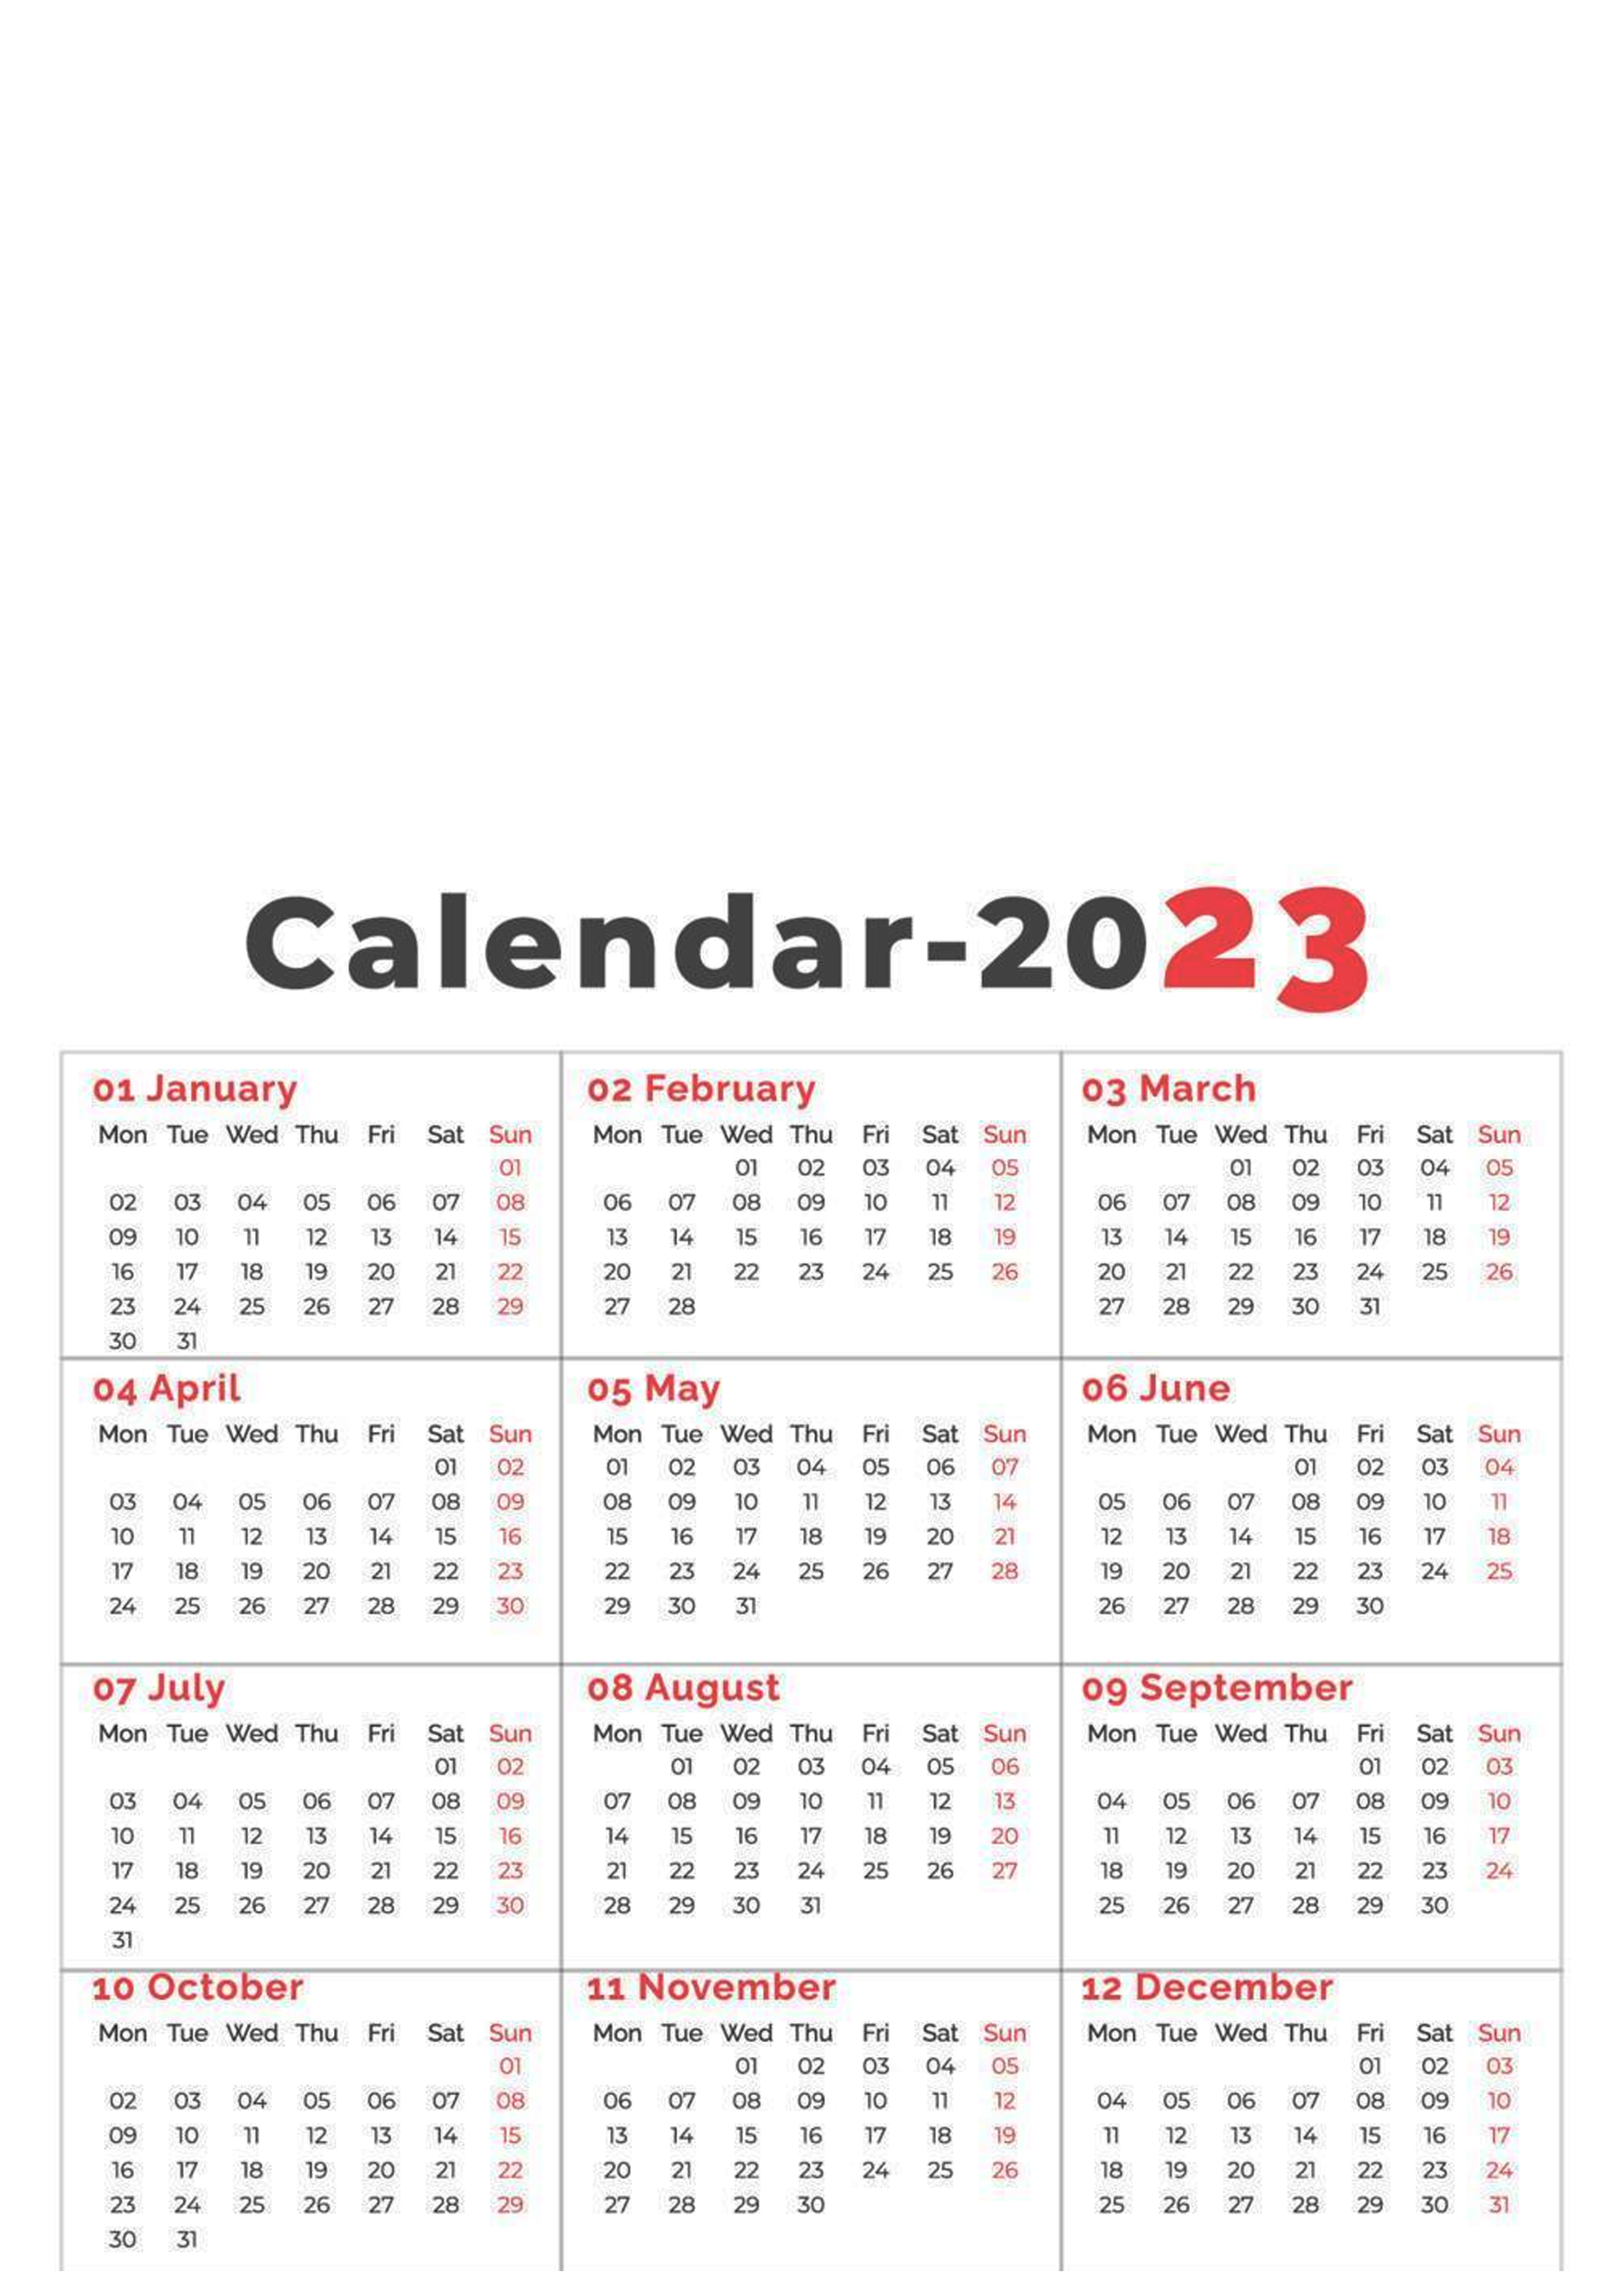 CDAR4 - HAPPY NEW YEAR Calendar 2023 TEMPLATE